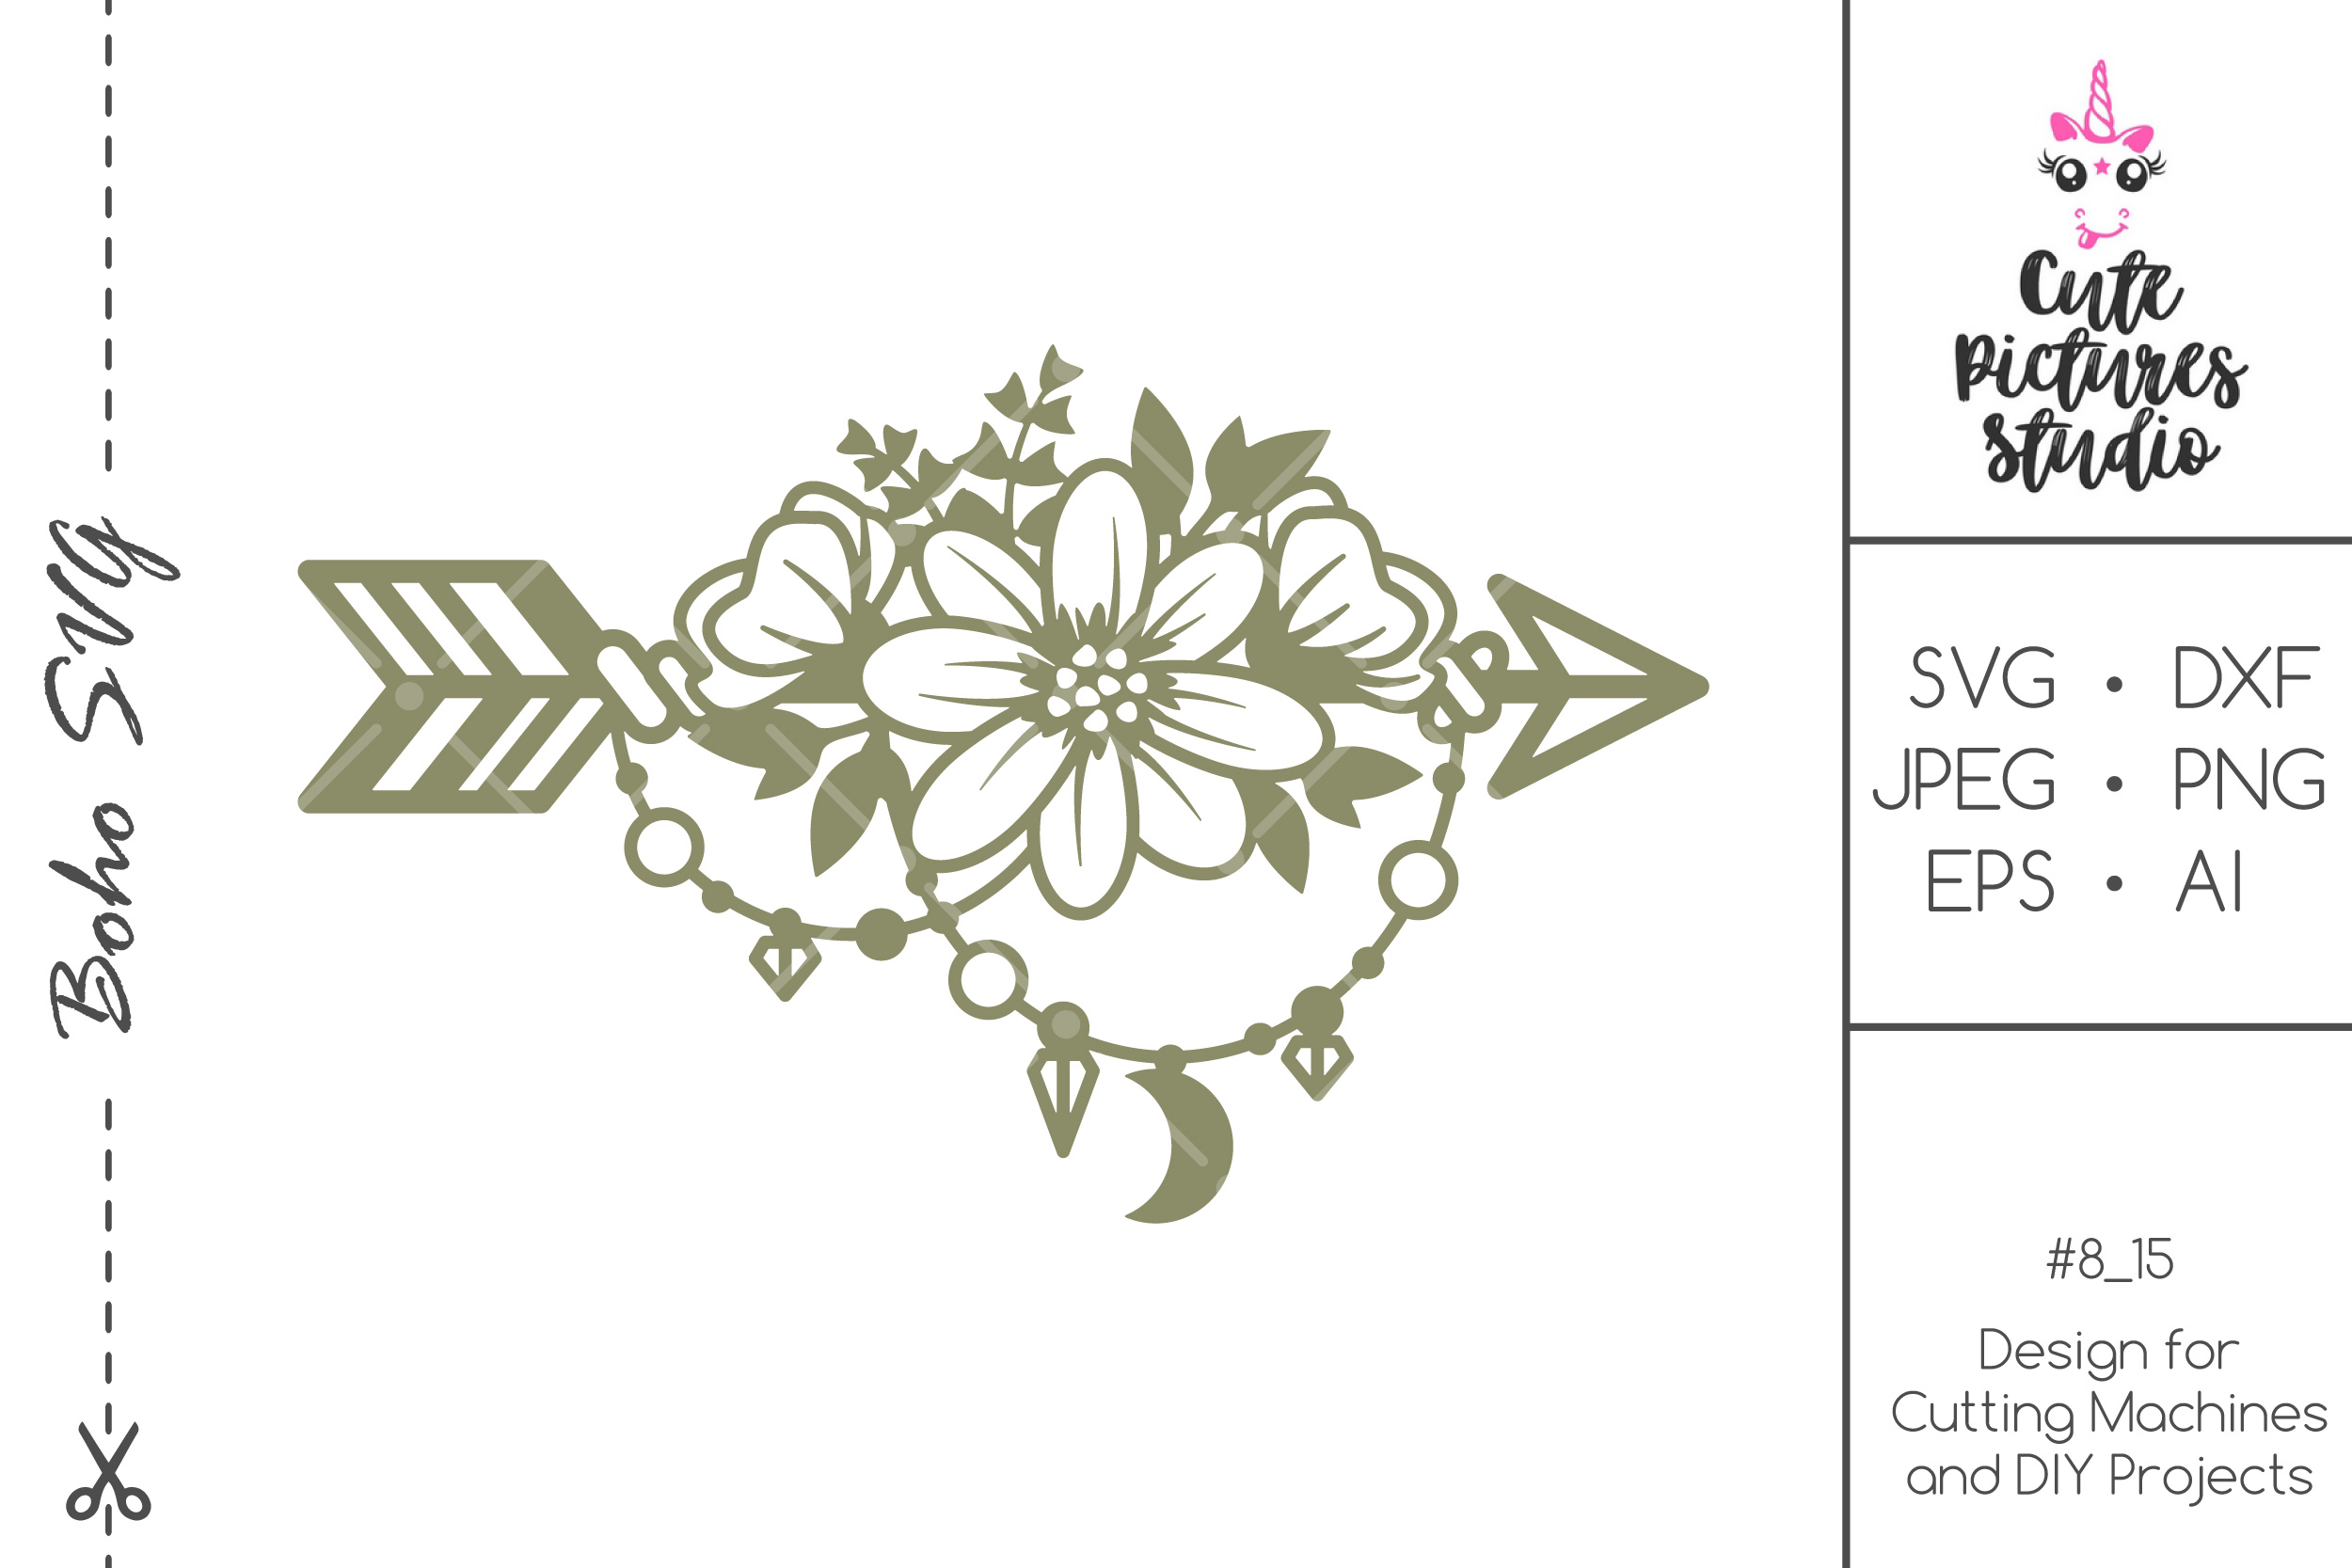 Boho stile arrow with flowers SVG cut file